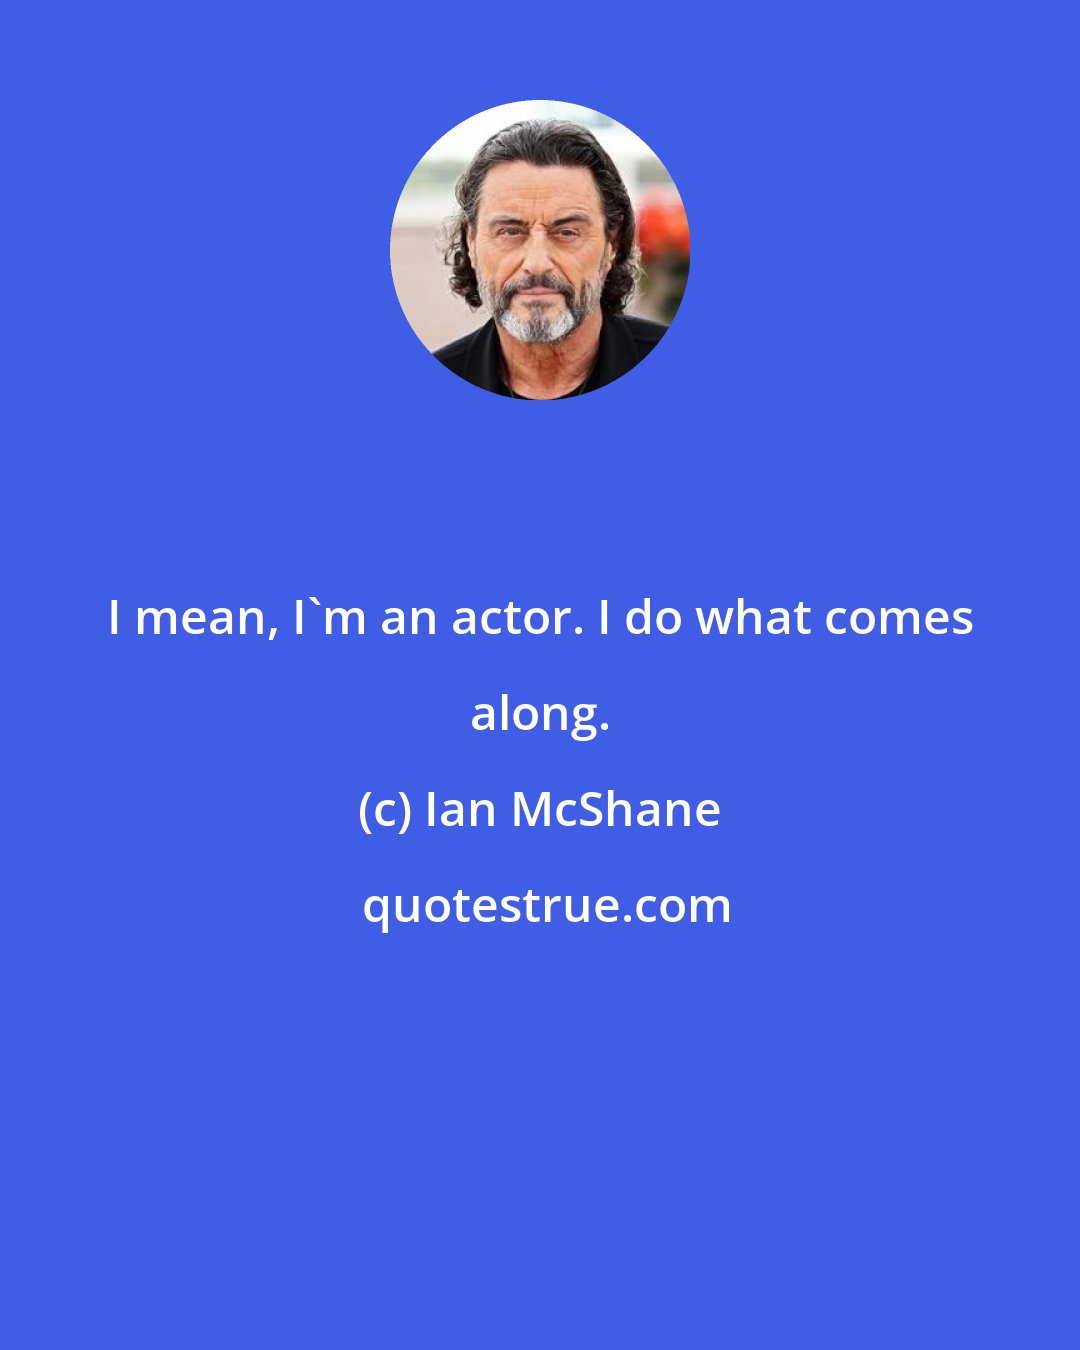 Ian McShane: I mean, I'm an actor. I do what comes along.